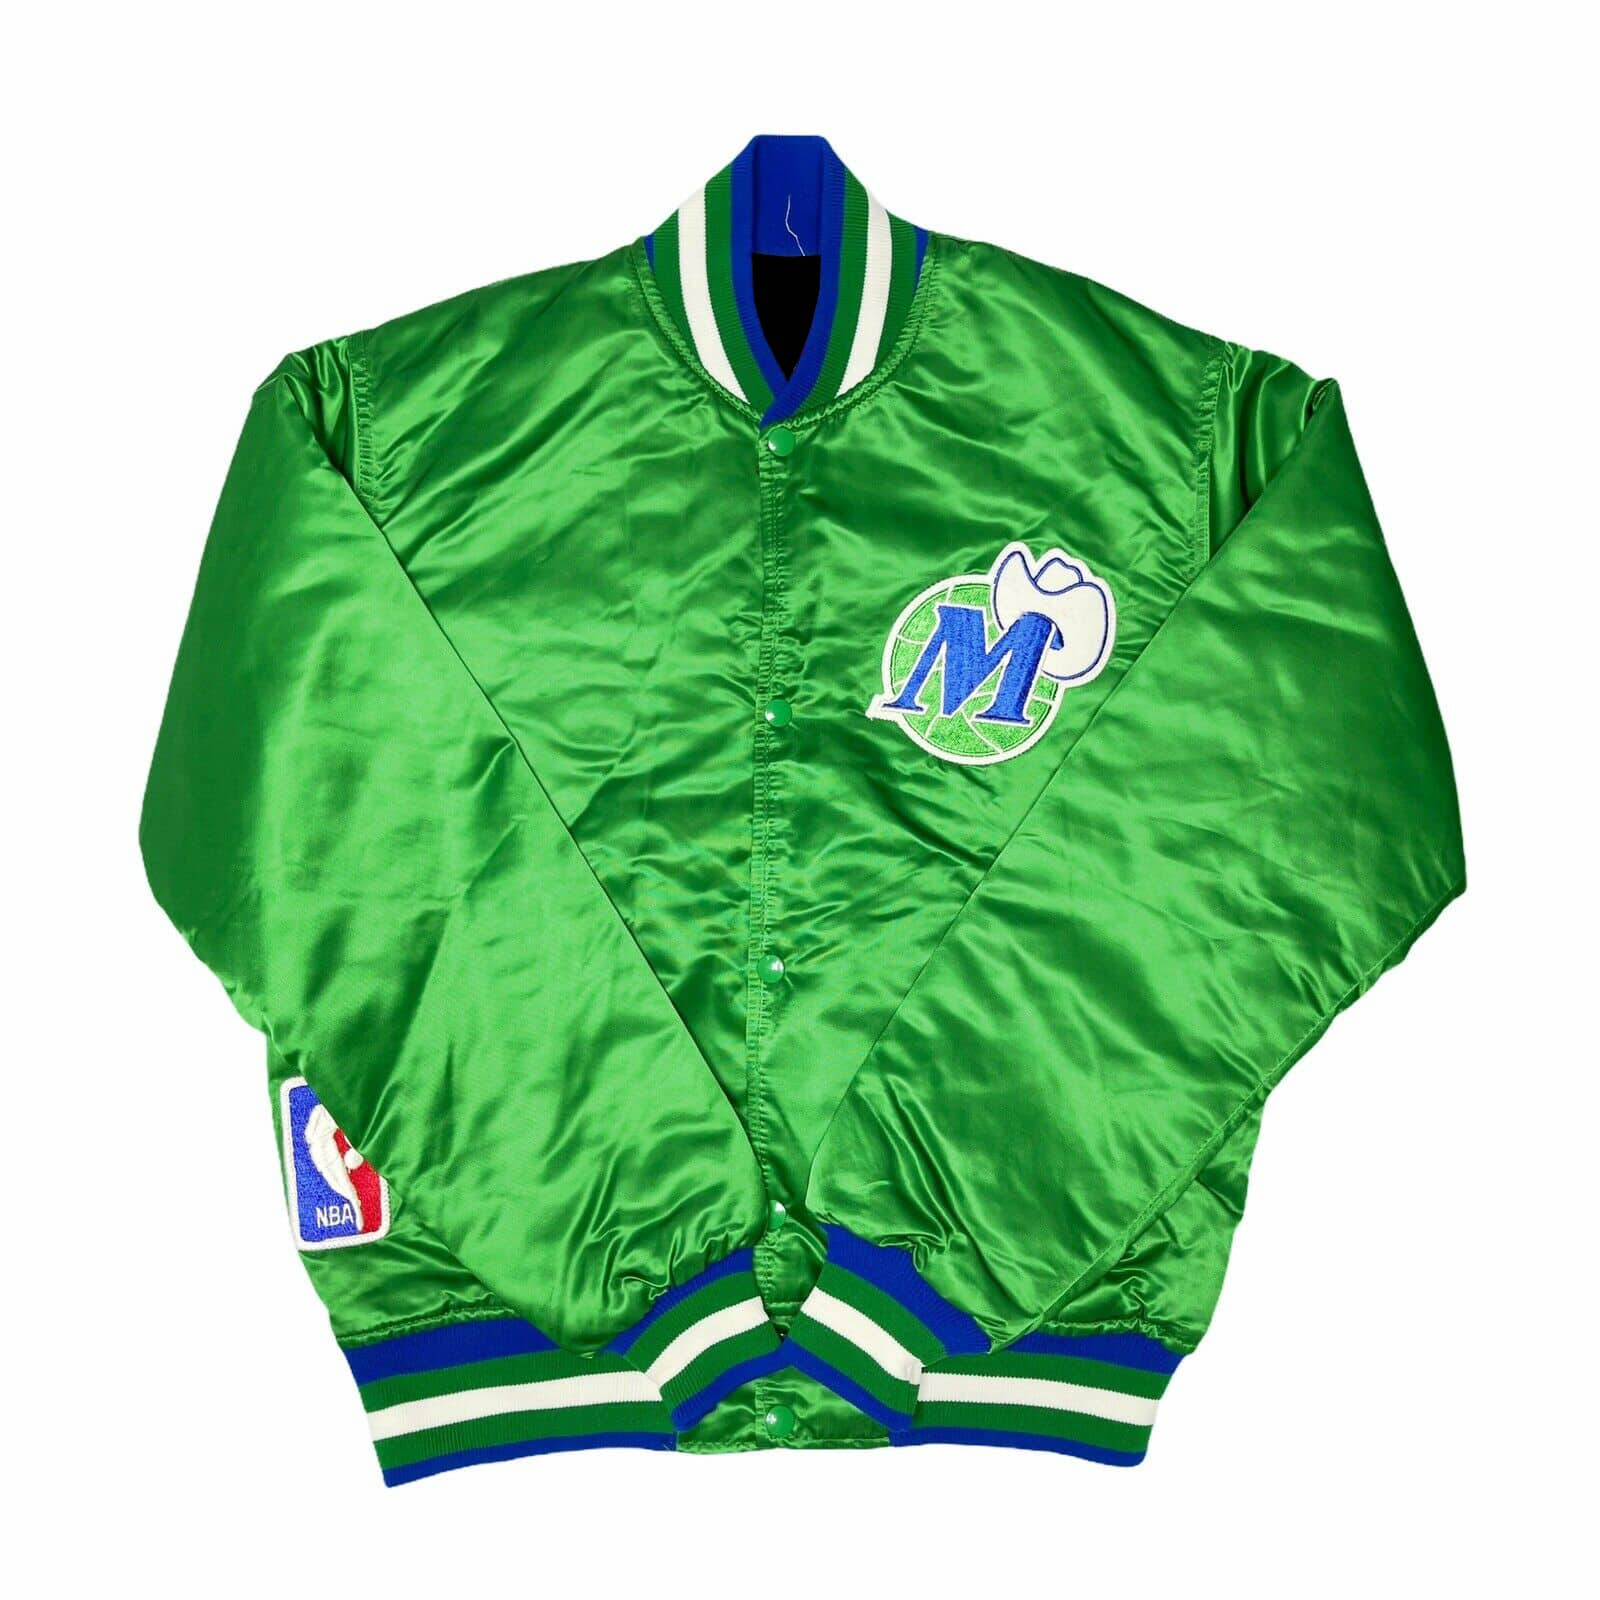 NBA Dallas Mavericks Established 1980 Green Satin Jacket